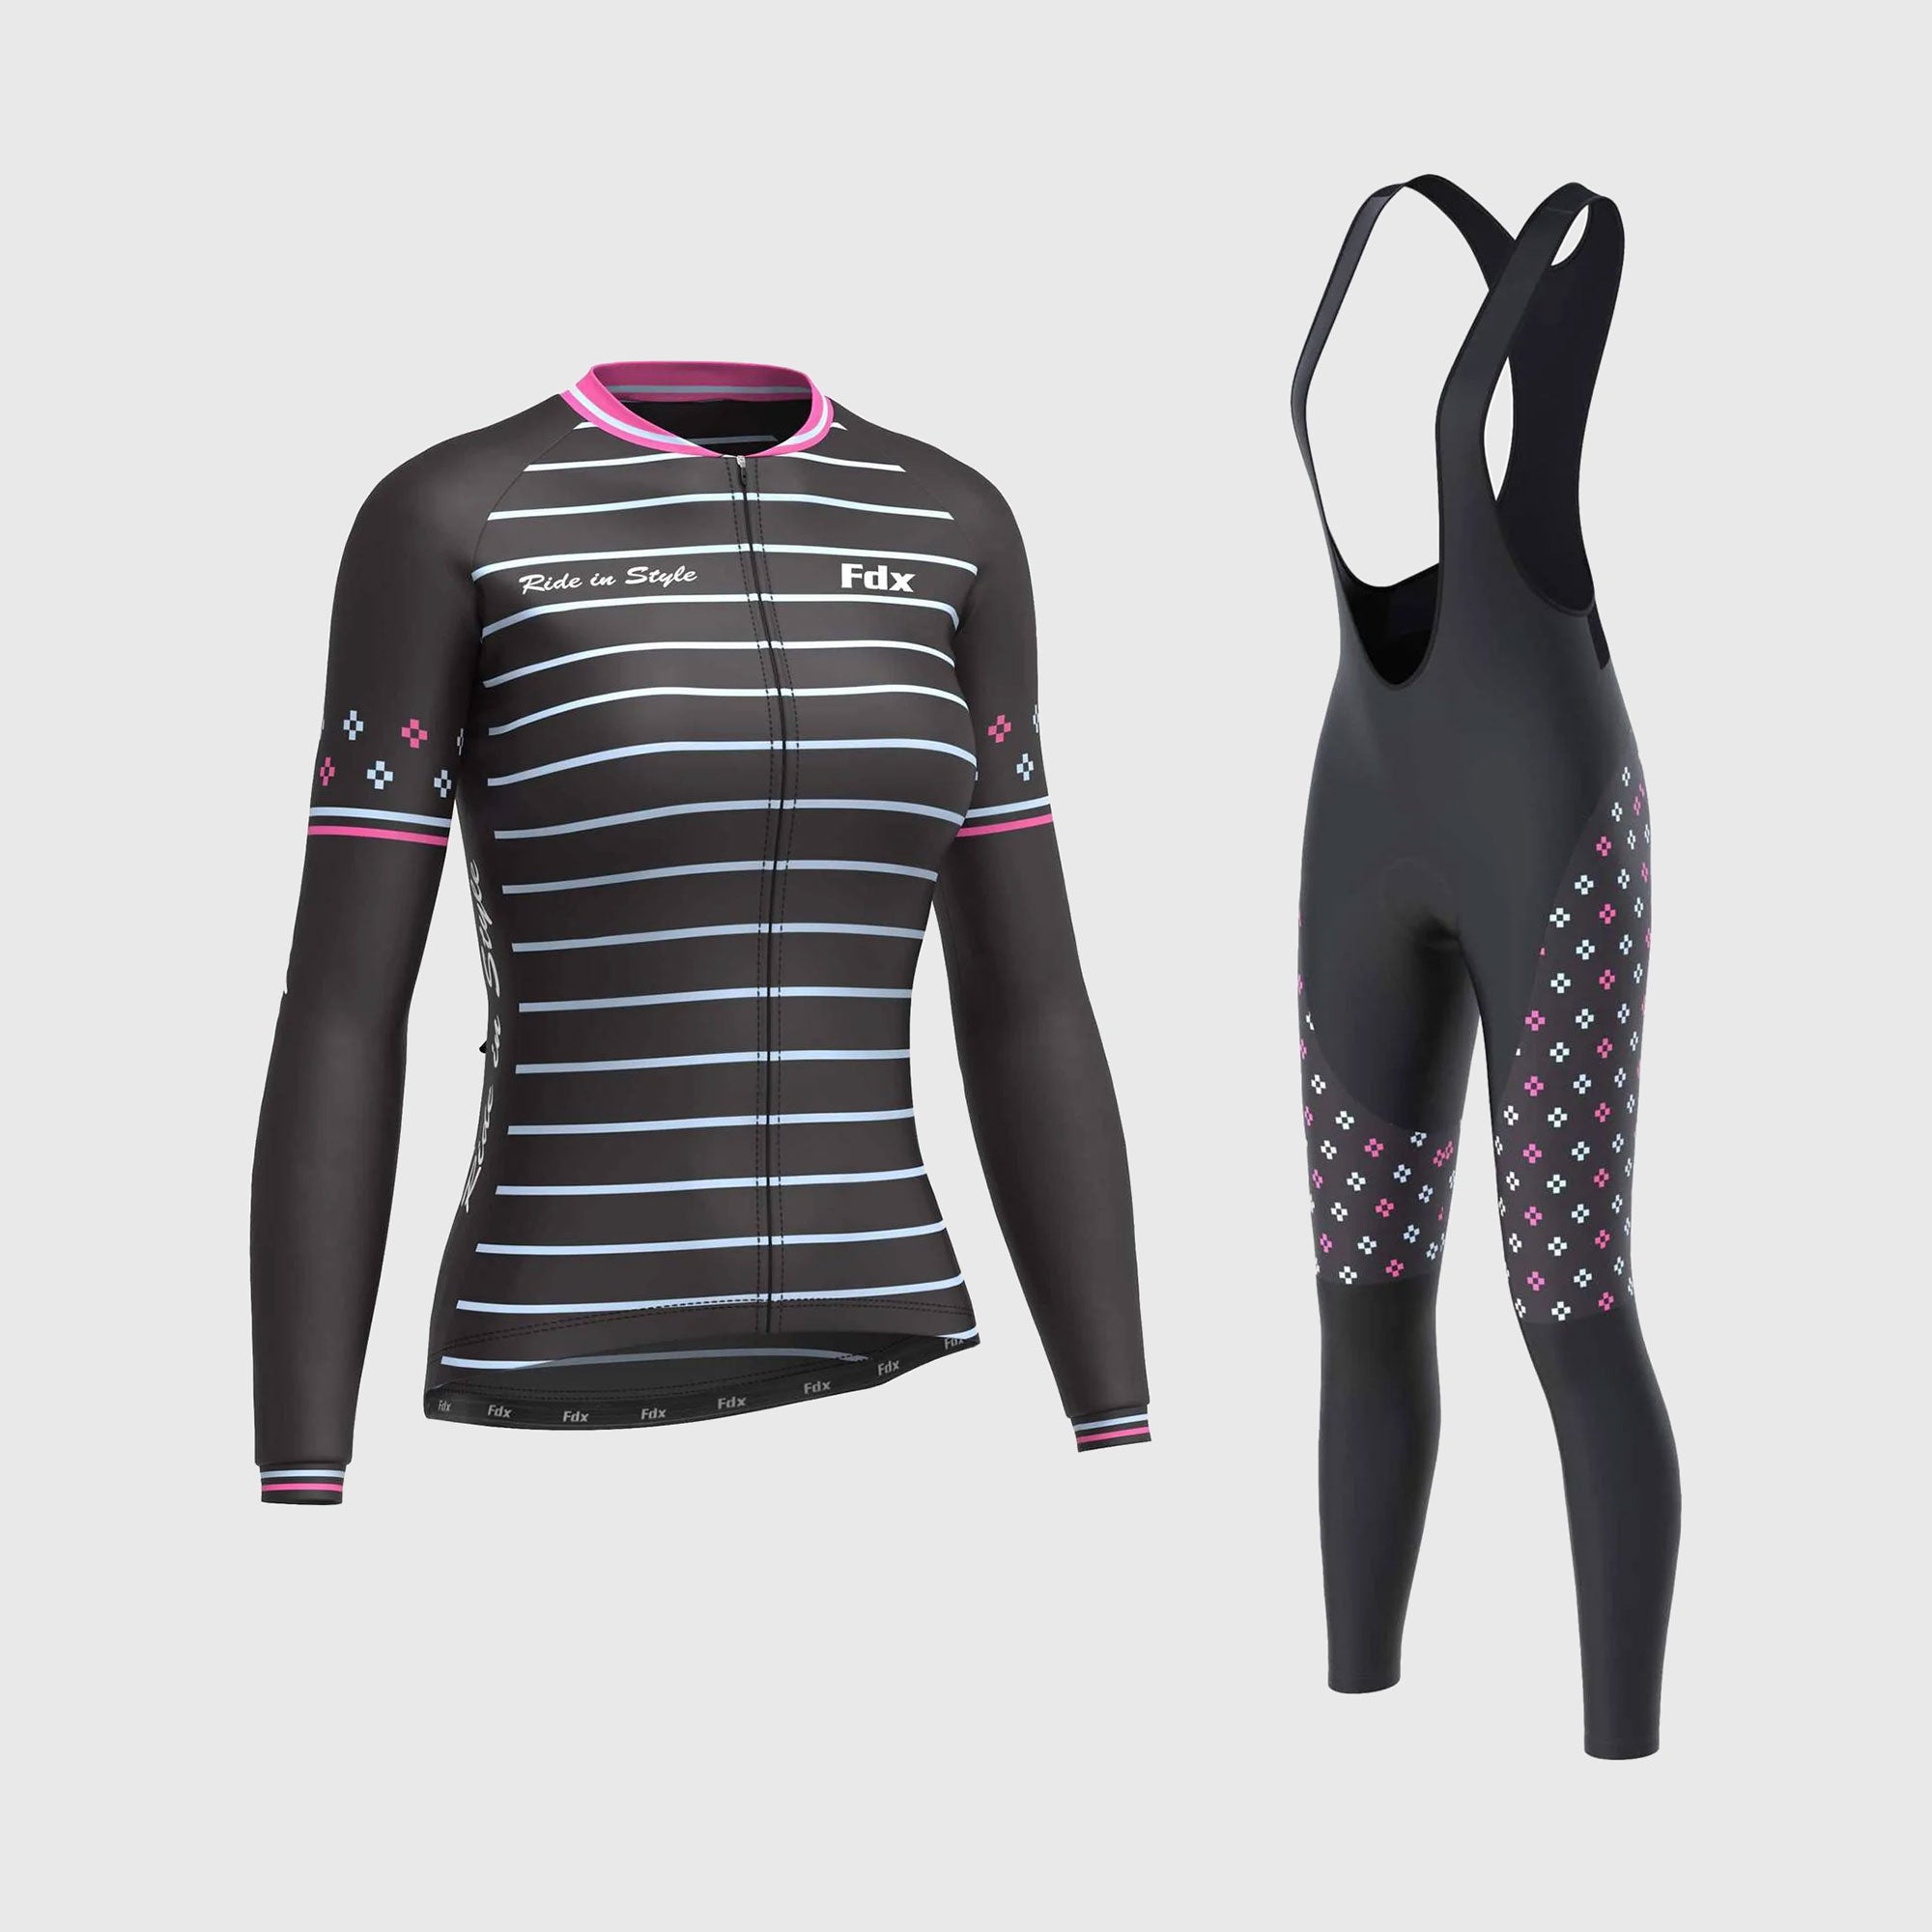 Fdx Women's Set Ripple Thermal Long Sleeve Cycling Jersey & Bib Tights - Pink